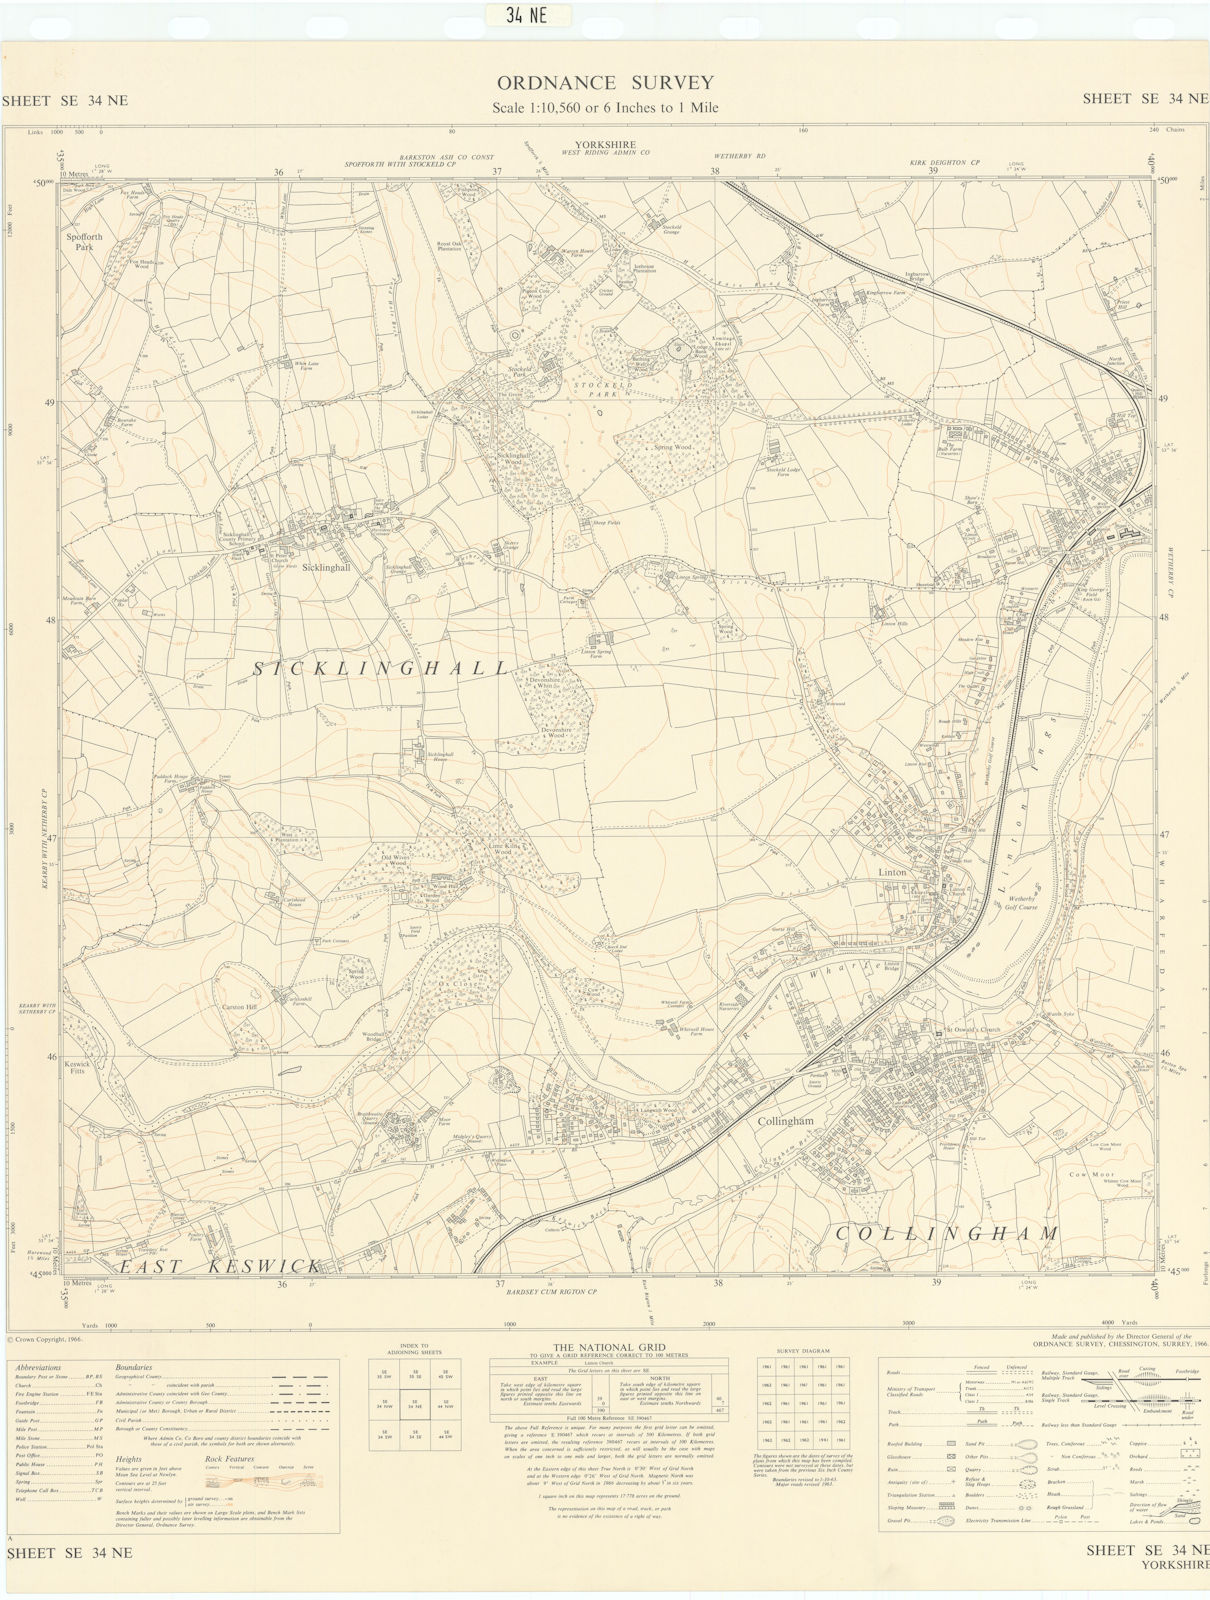 Ordnance Survey SE34NE Yorks Collingham Linton Sicklinghall Wetherby 1966 map